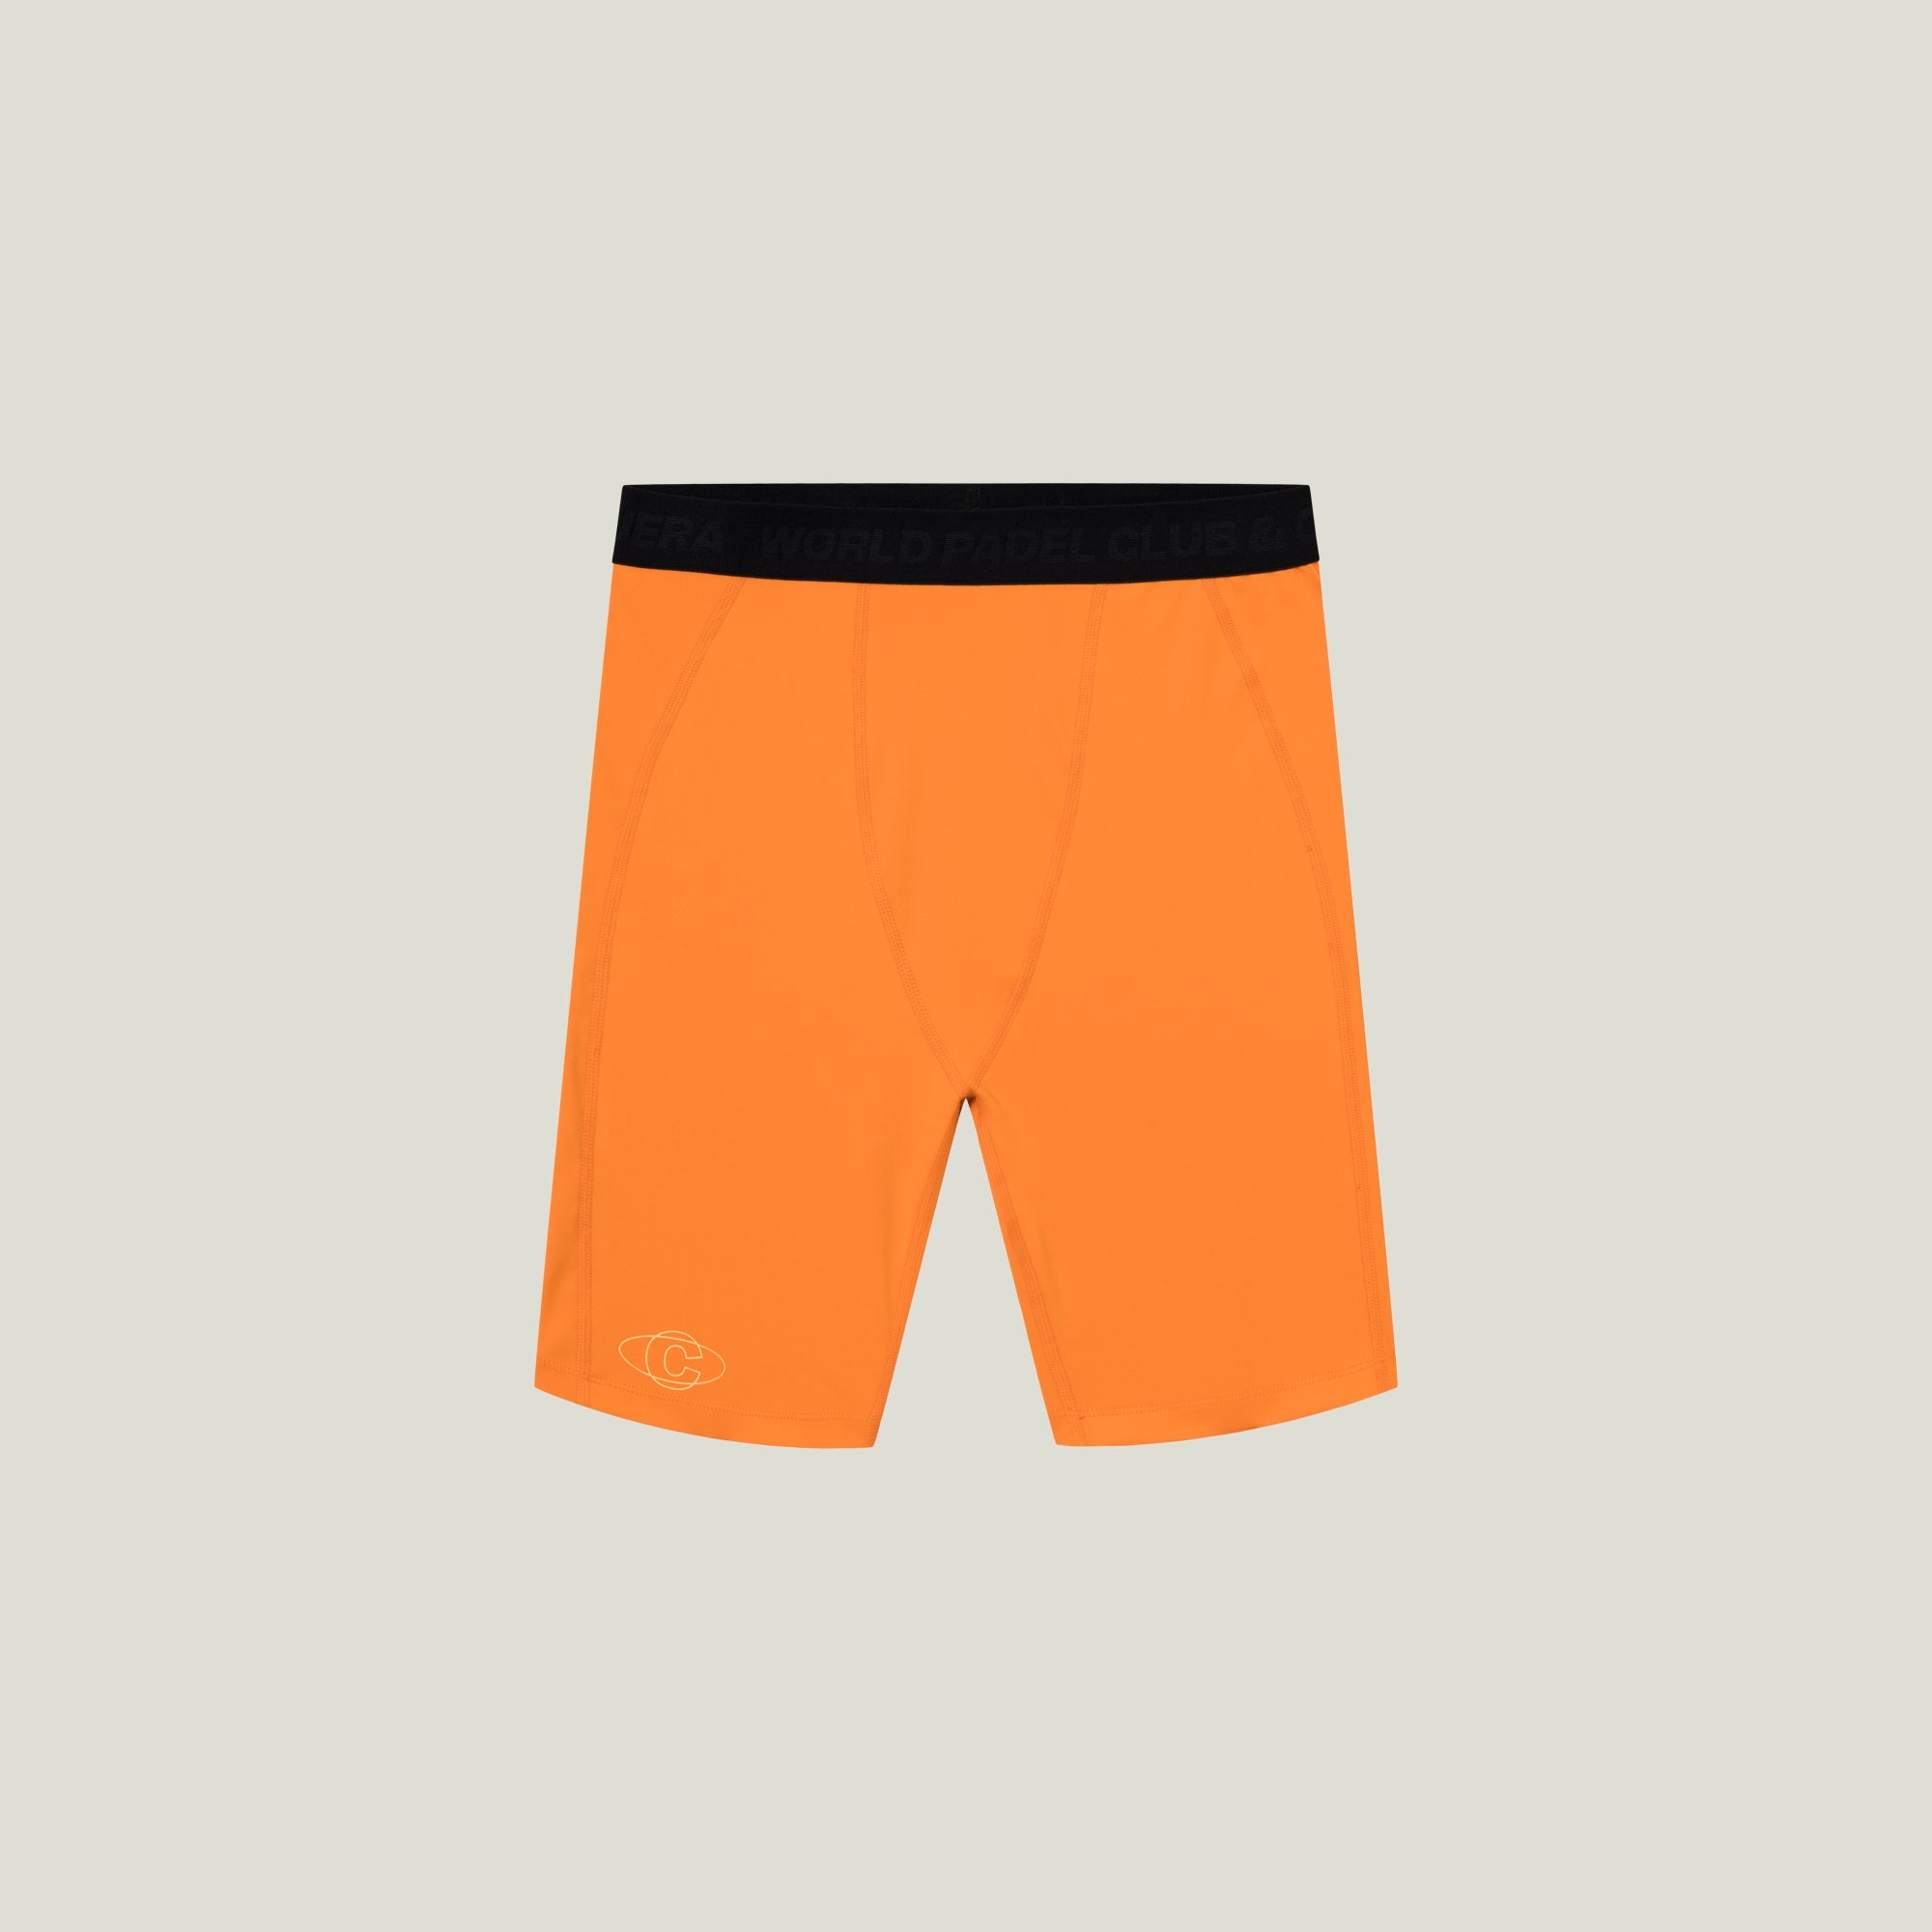 Se Cuera Oncourt Layer Tights (Orange) - XXL hos Padellife